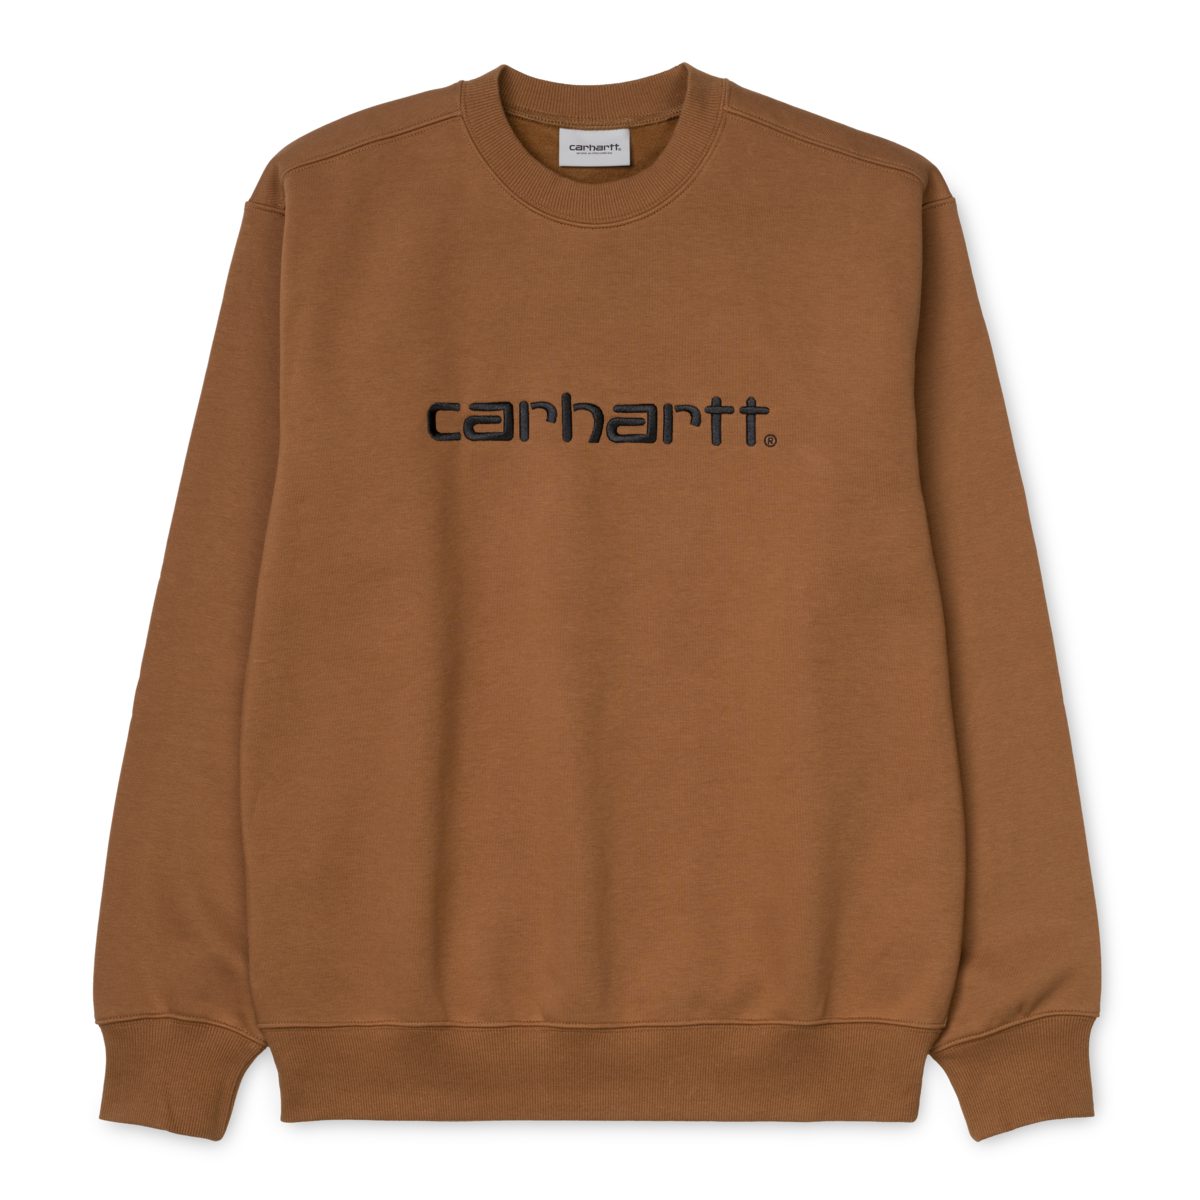 Carhartt Hamilton Brown/Black Sweater